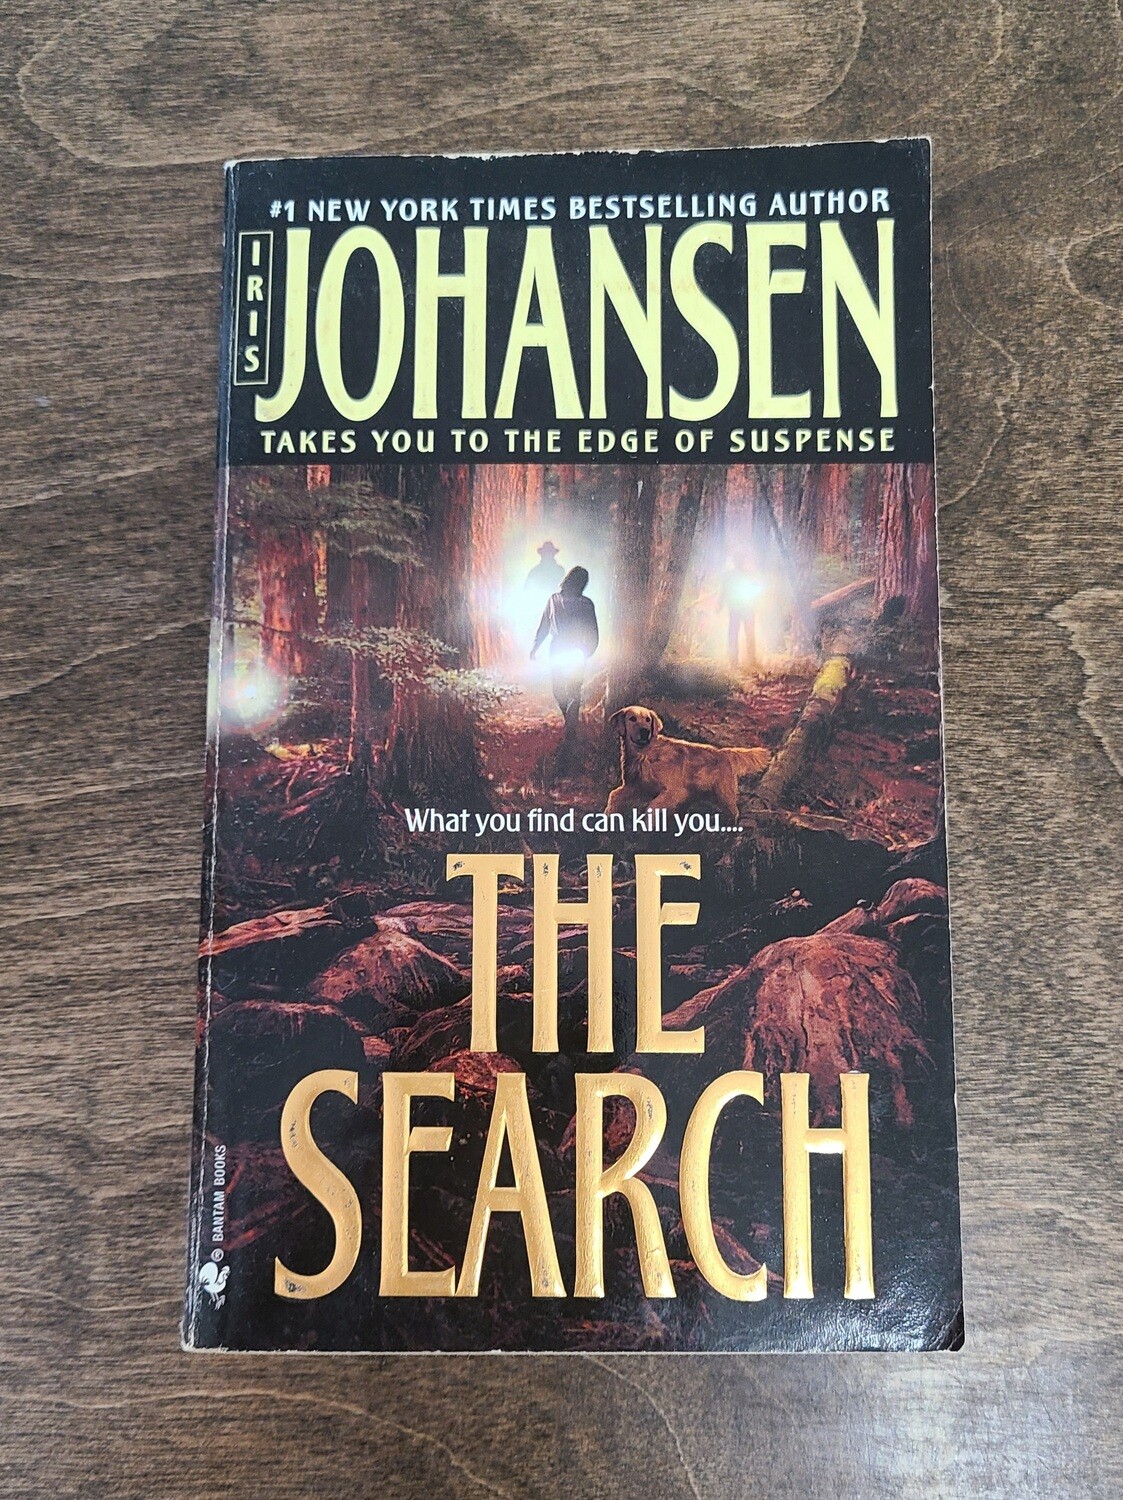 The Search by Iris Johansen